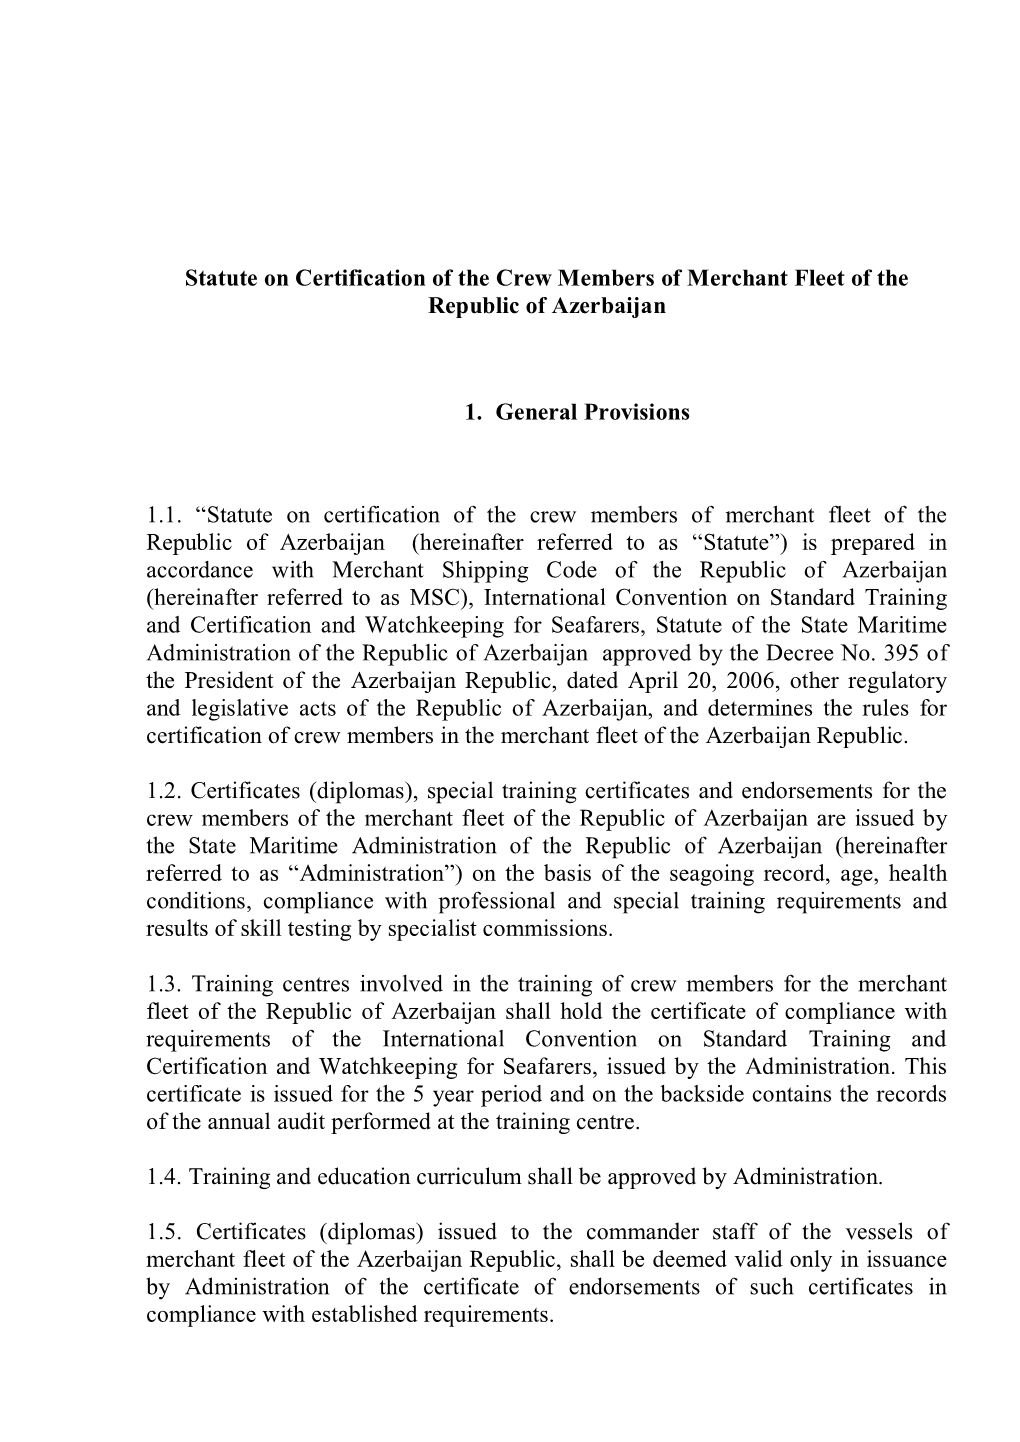 PDF of Regulations in English